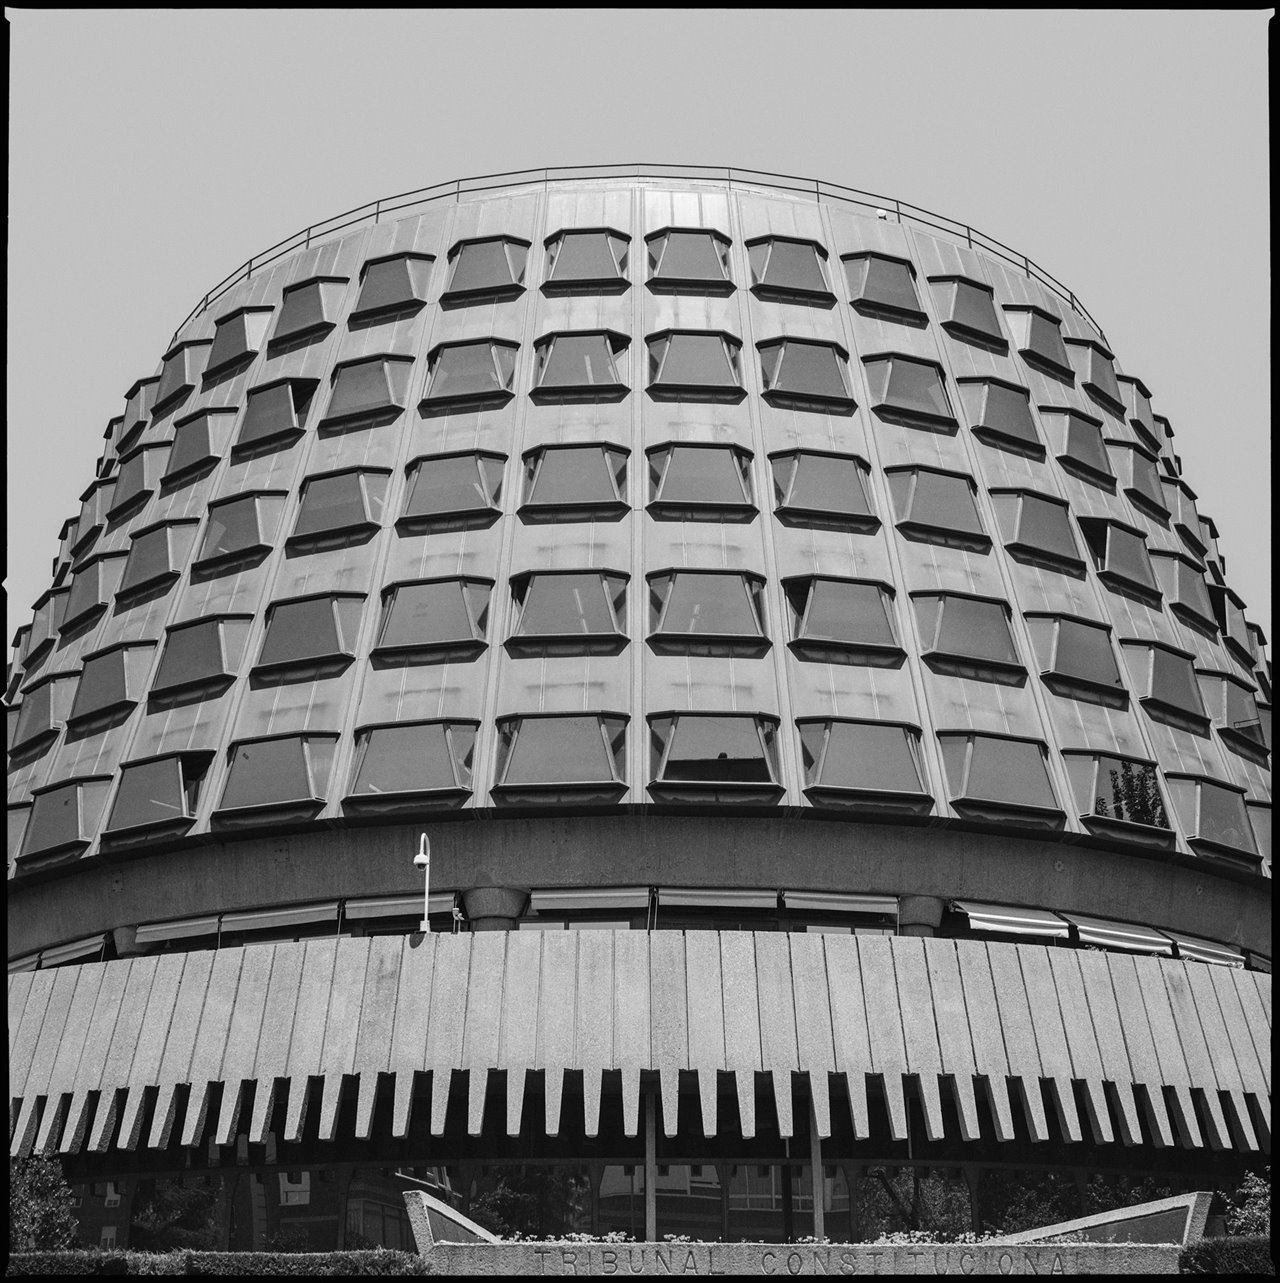 Tribunal Constitucional, Madrid, España. (Arquitectos: Antonio Bonet y Francisco González Valdés, 1973-80).